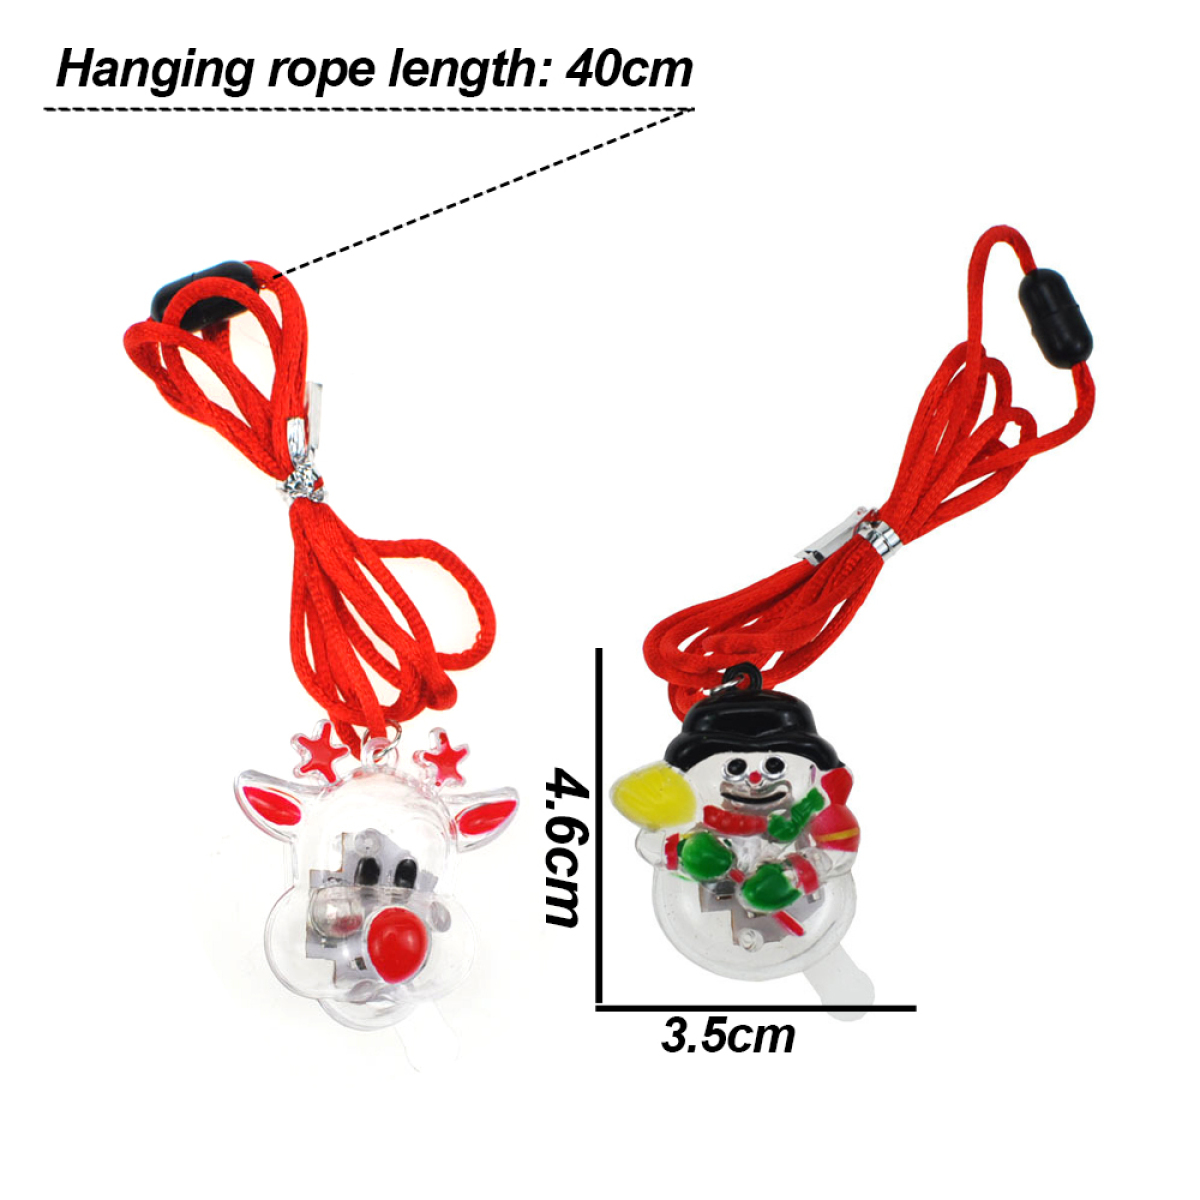 COZEVDNT Light-Up Christmas Bulb - Parties Necklaces Accessories Weihnachtsdeko, Mehrfarbig for Festive Xmas